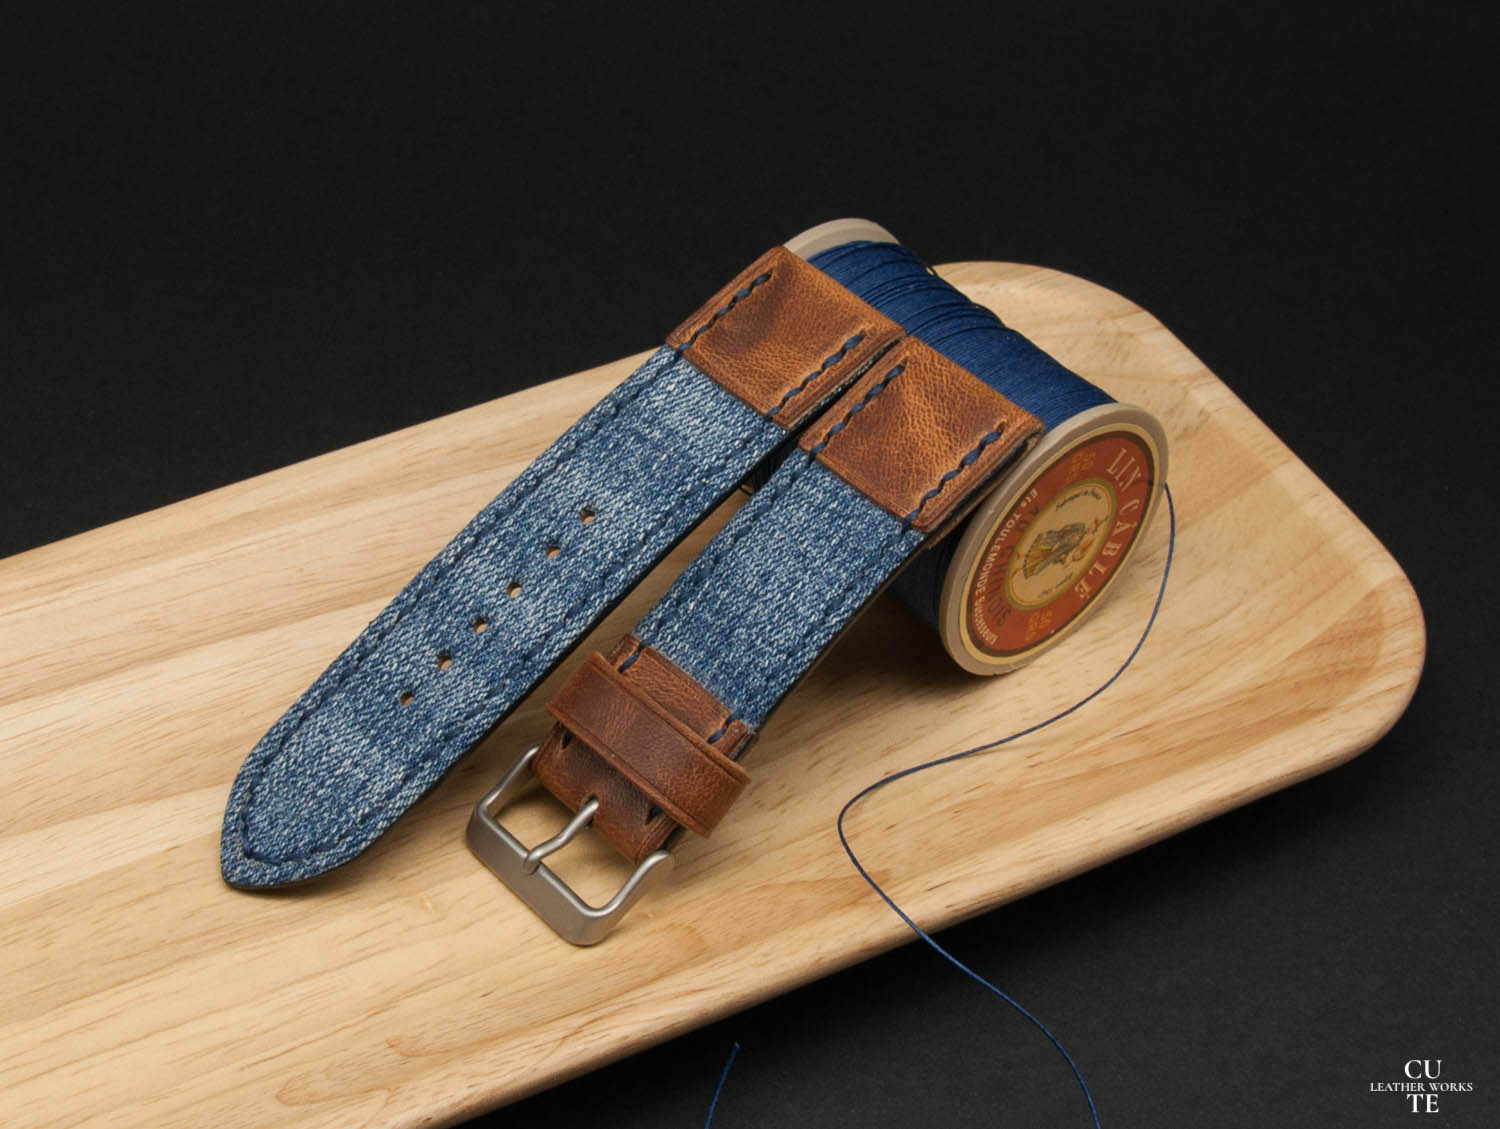 Denim Watch Band With Badalassi Leather, Handmade in Finland